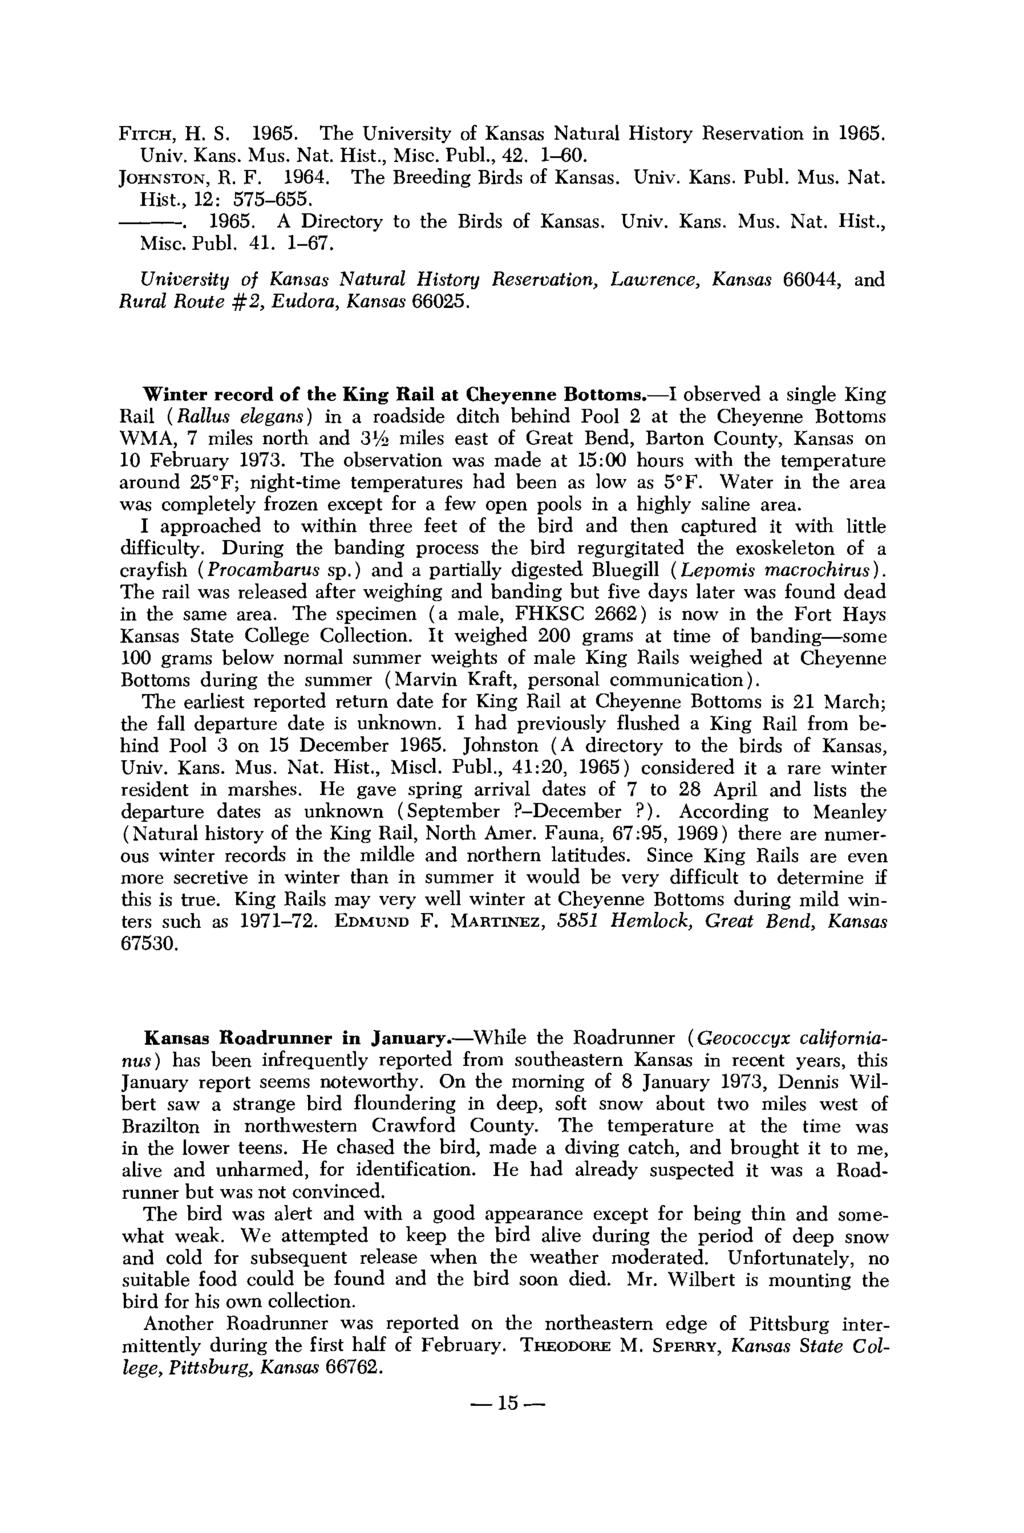 FITCH, H. S. 1965. The University of Kansas Natural History Reservation in 1965. Univ. Kans. Mus. Nat. Hist., Misc. Publ., 42. 1-60. JOHNSTON, R. F. 1964. The Breeding Birds of Kansas. Univ. Kans. Publ. Mus. Nat. Hist., 12: 575-655.